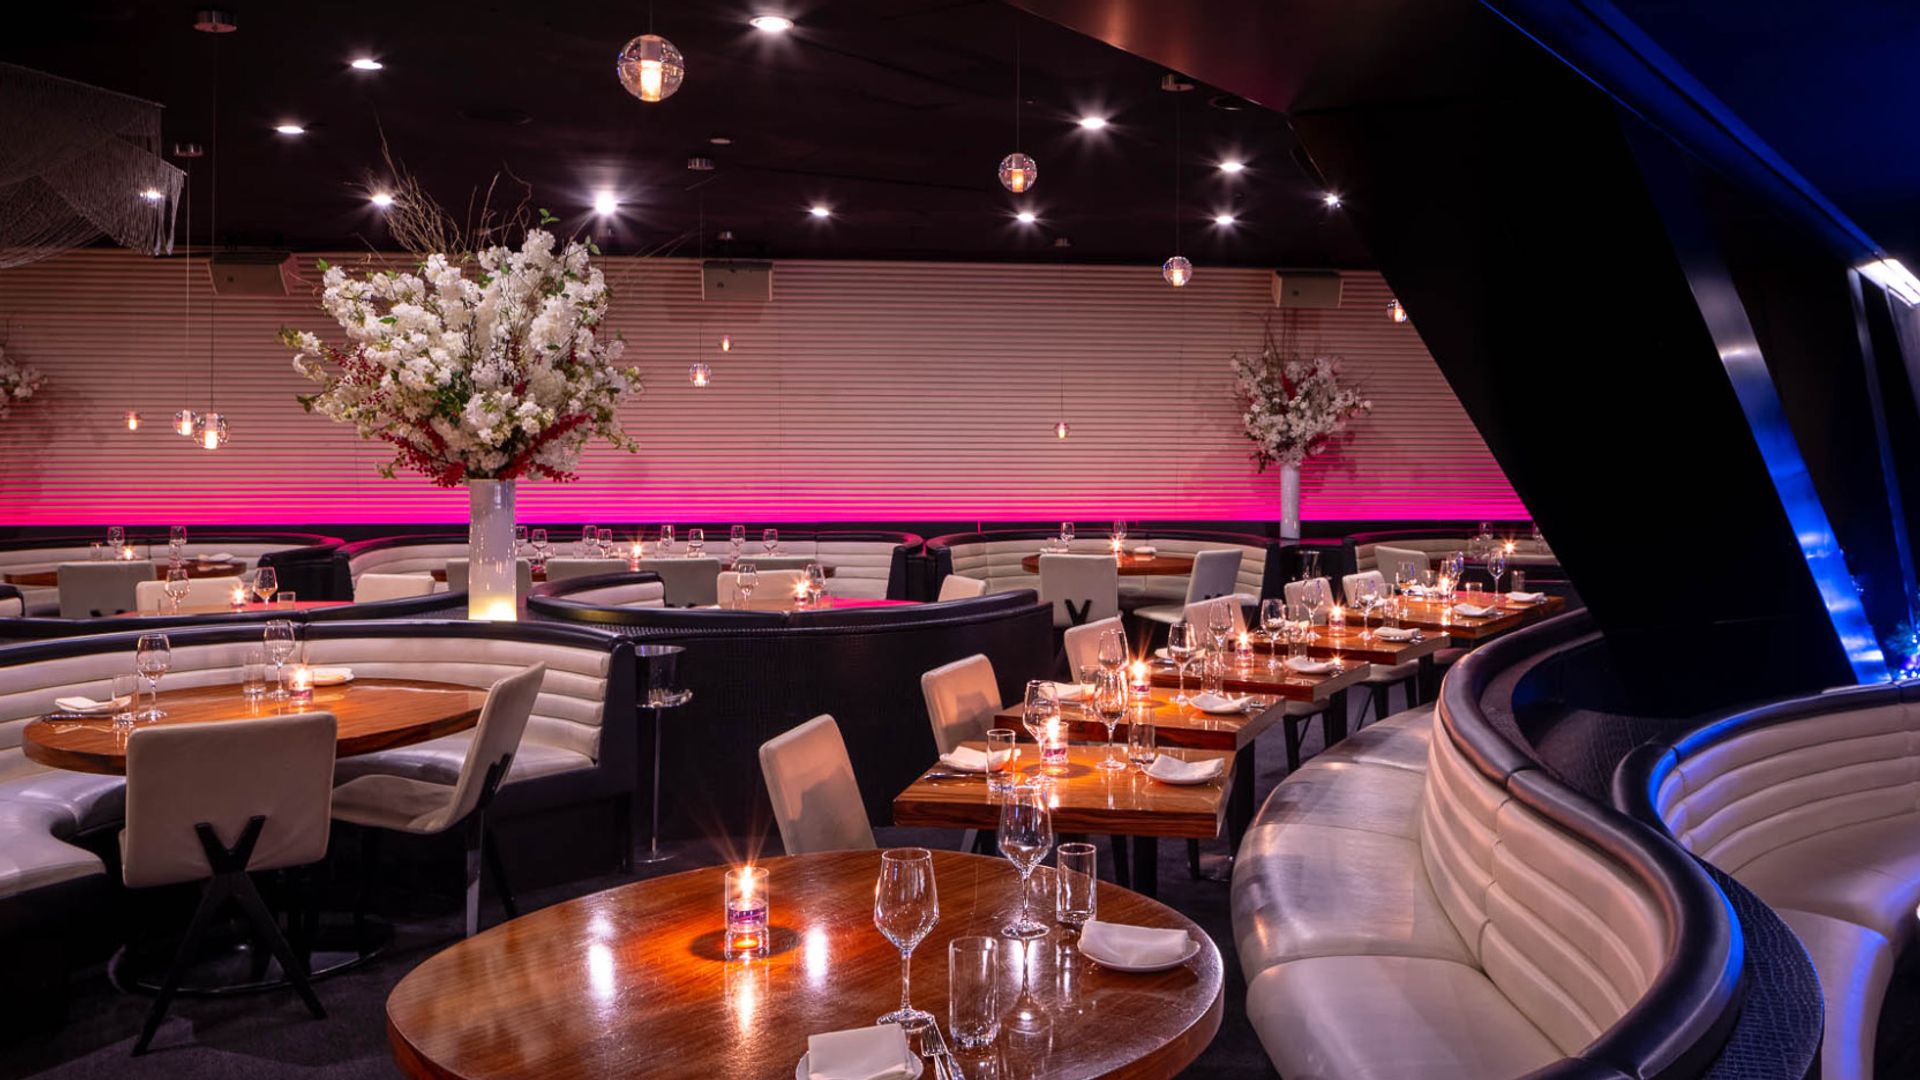 STK London's decor is part swanky Euro nightclub, part high dining steakhouse